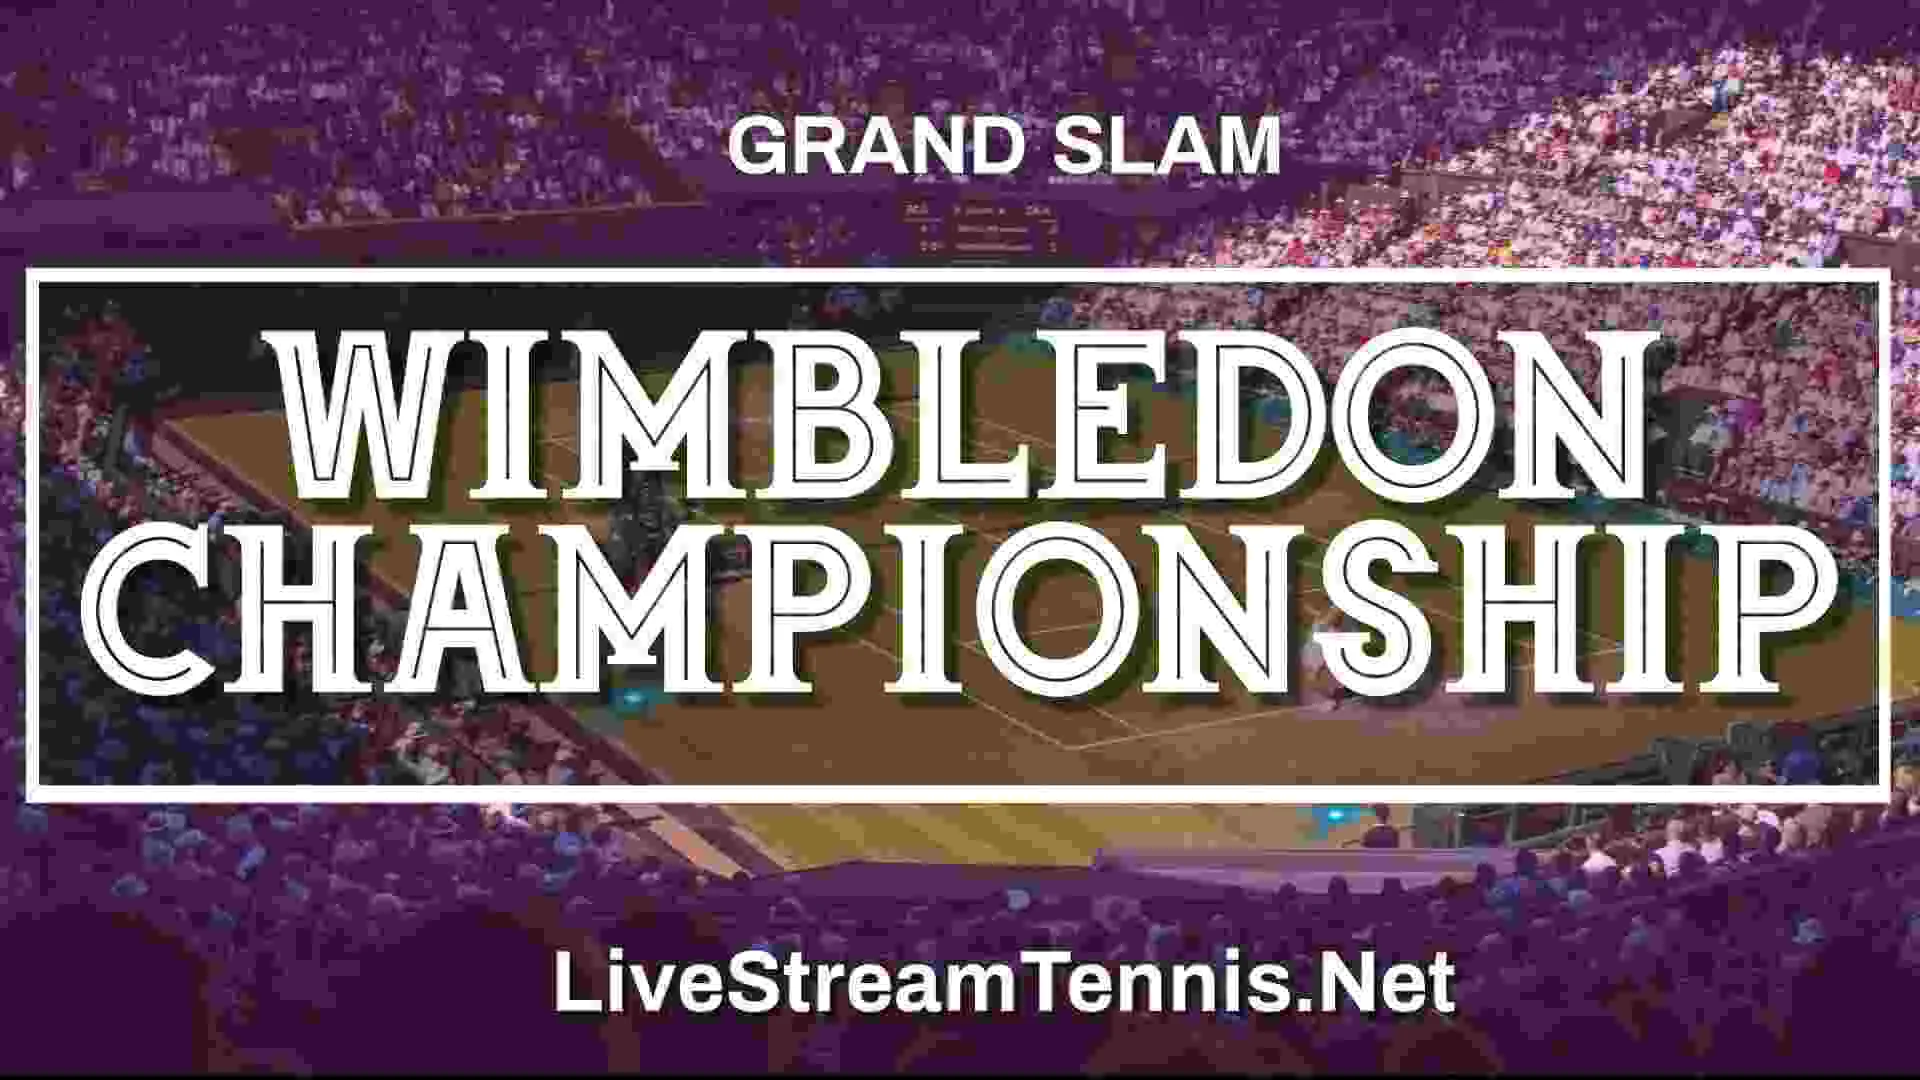 The Wimbledon Championship Live Stream